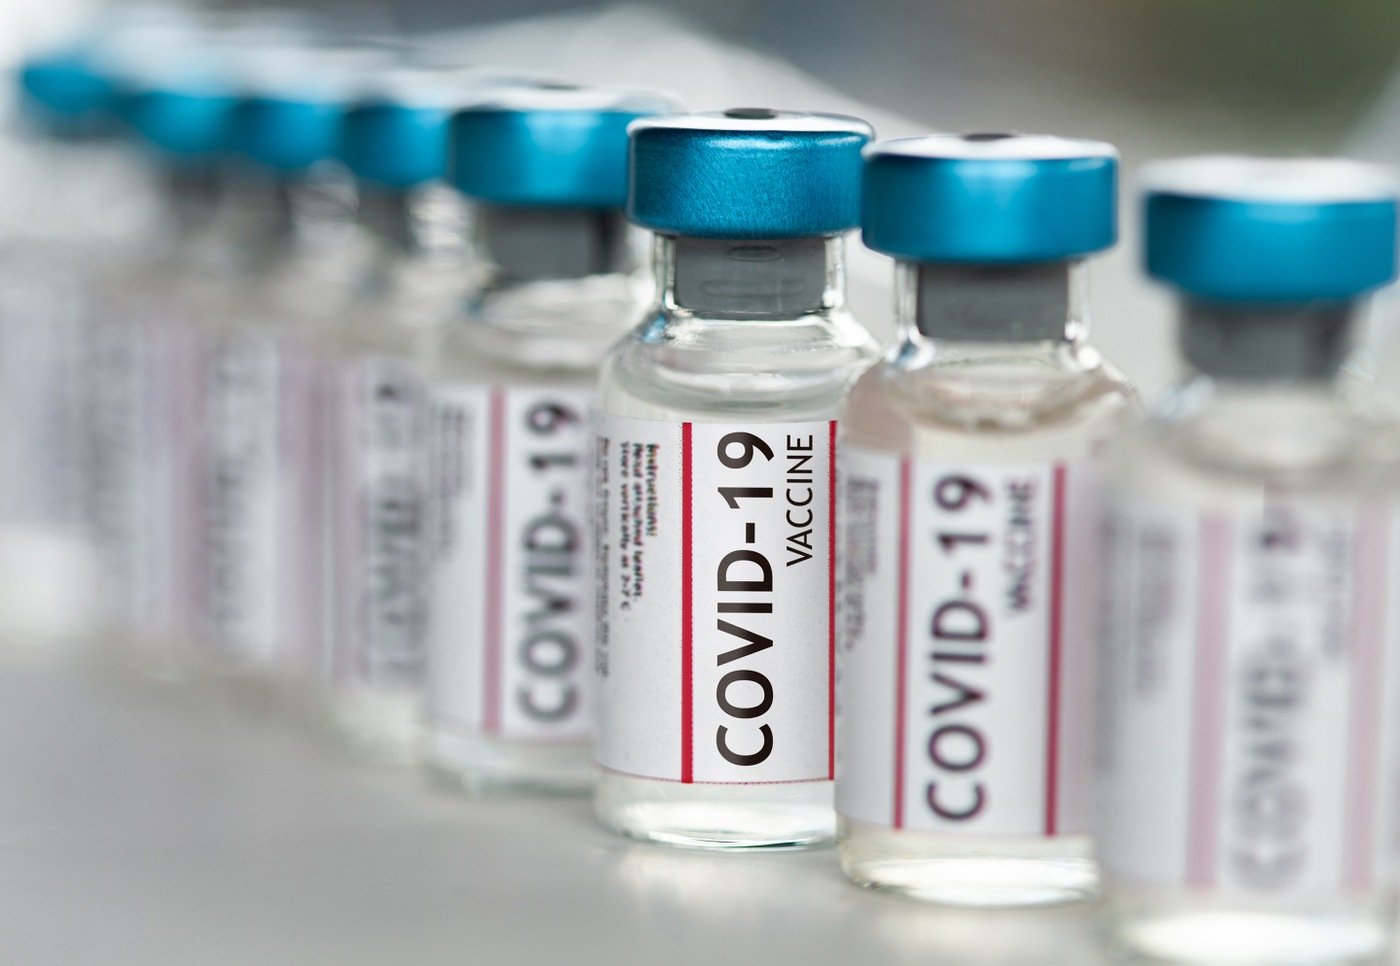 Coronavirus: Staying Safe, Work Realities & Finances